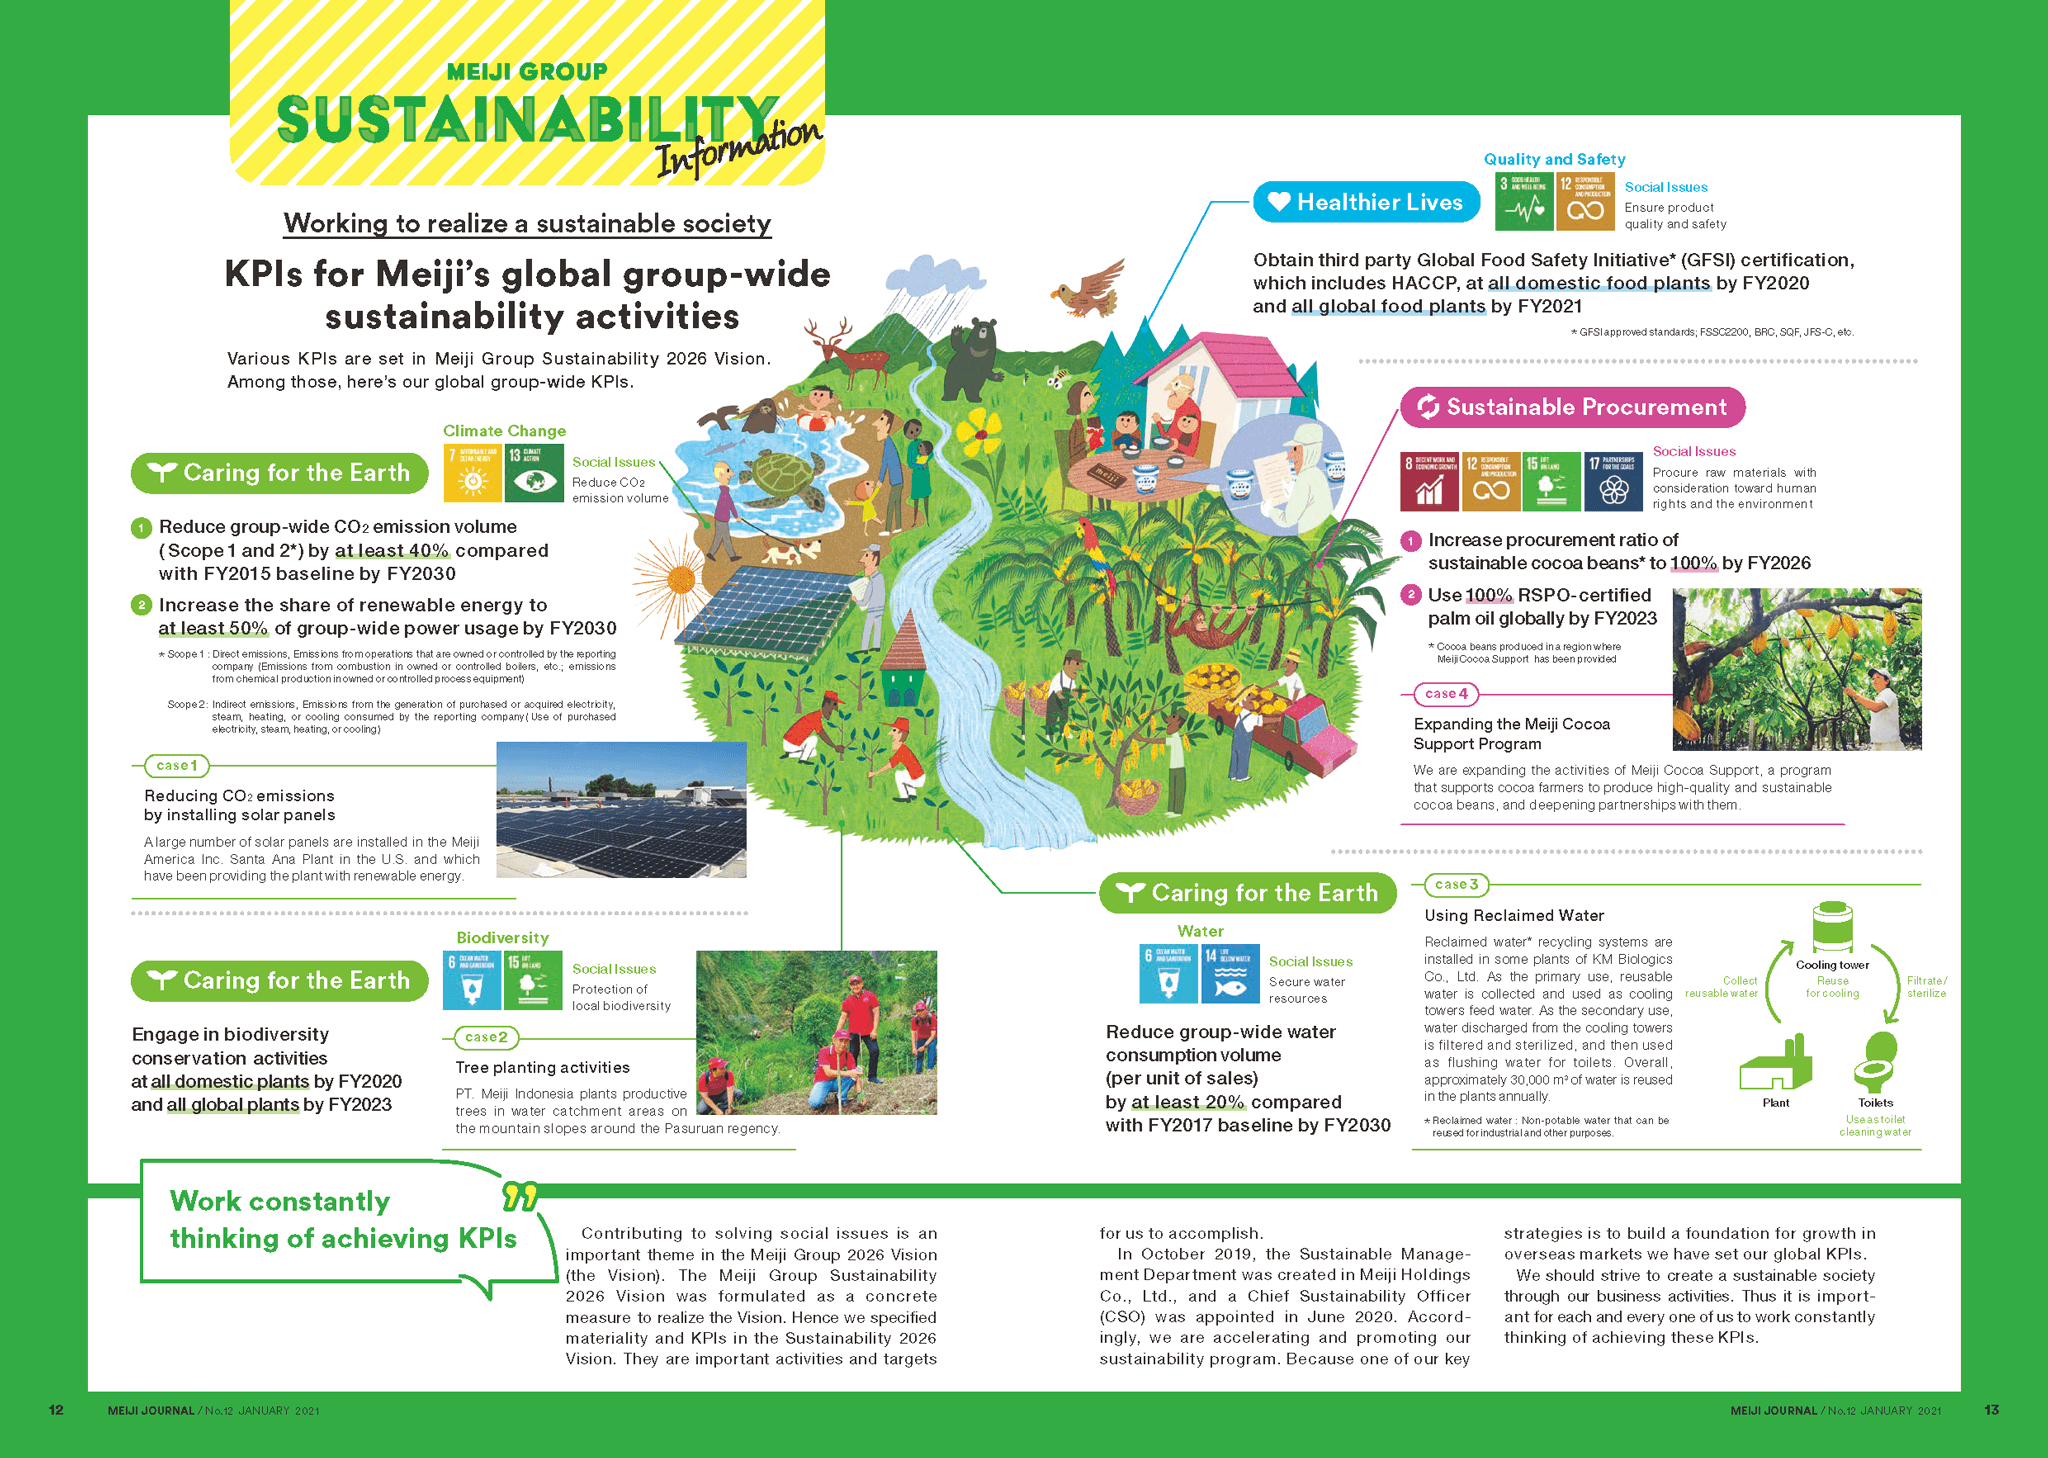 Figure: Meiji Group sustainability information